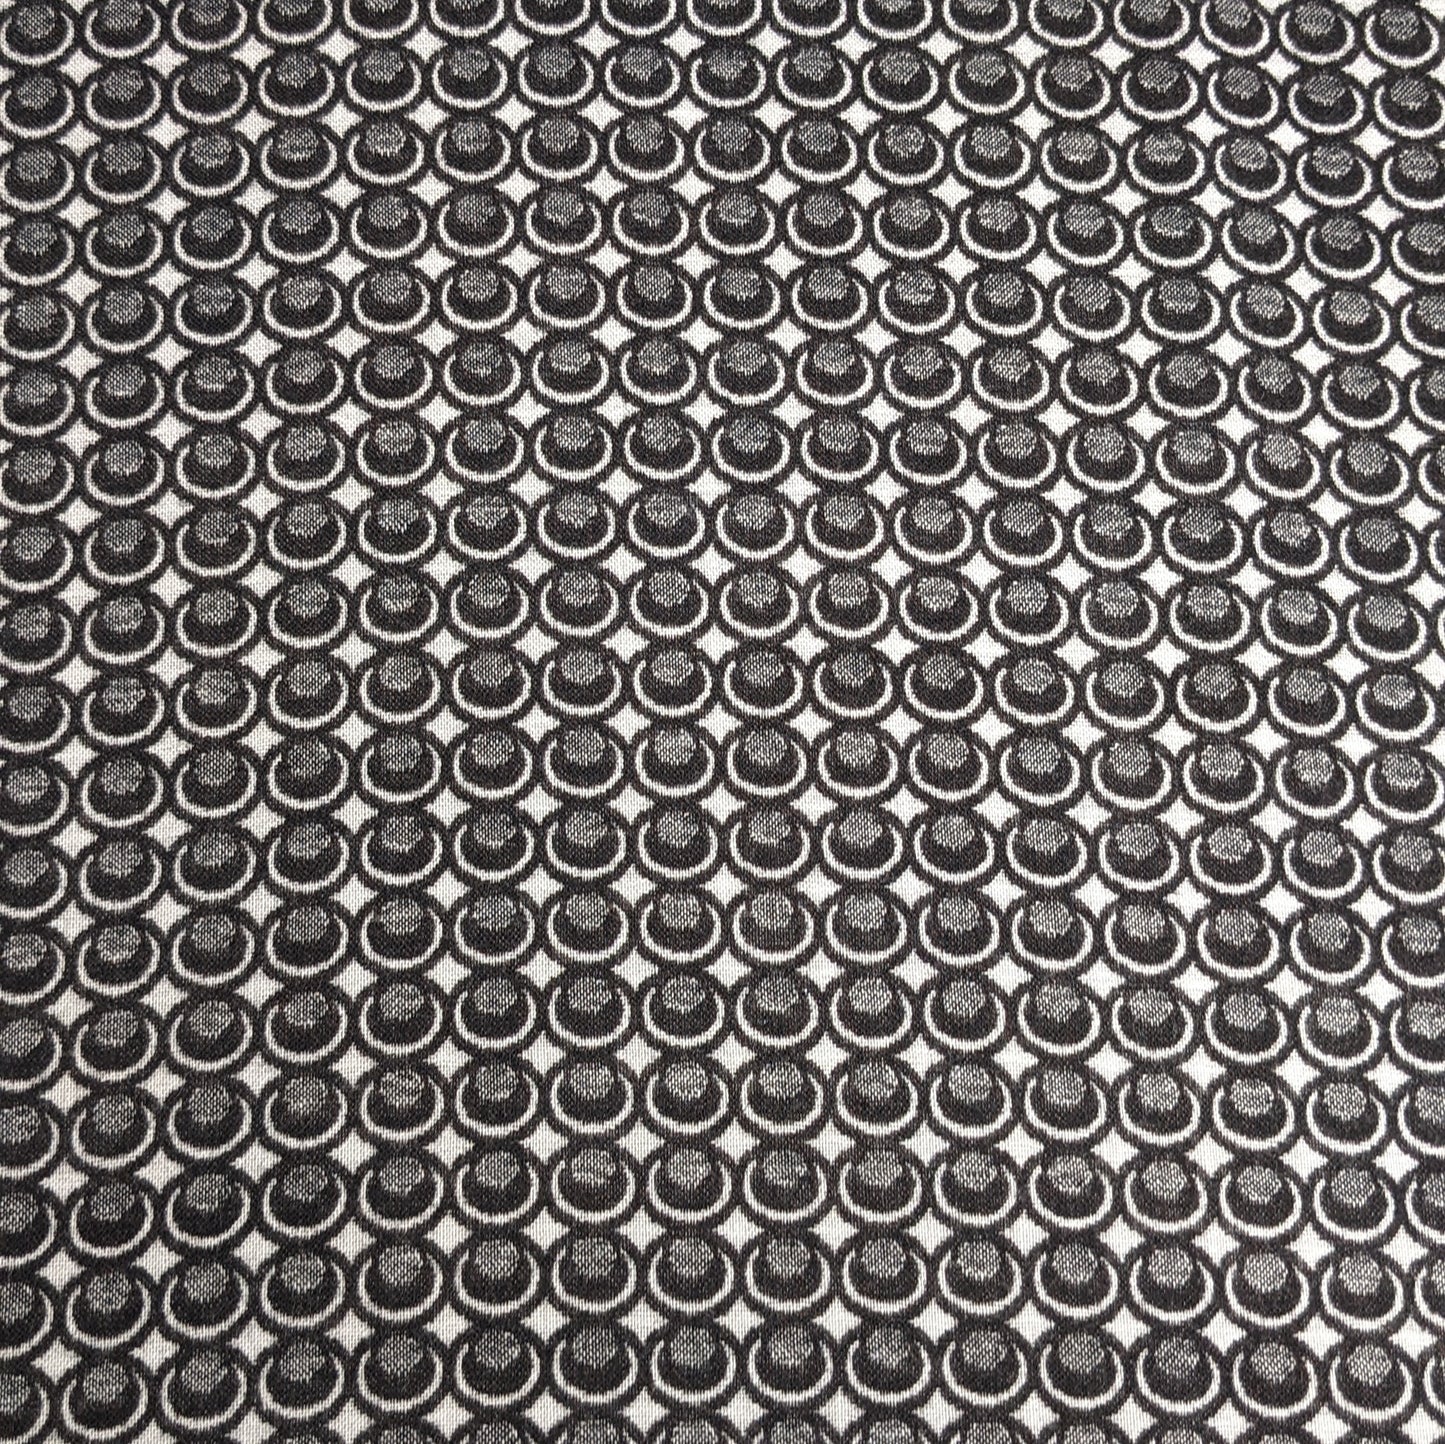 Wool Blend Jacquard Fabric - Circles - Black and White